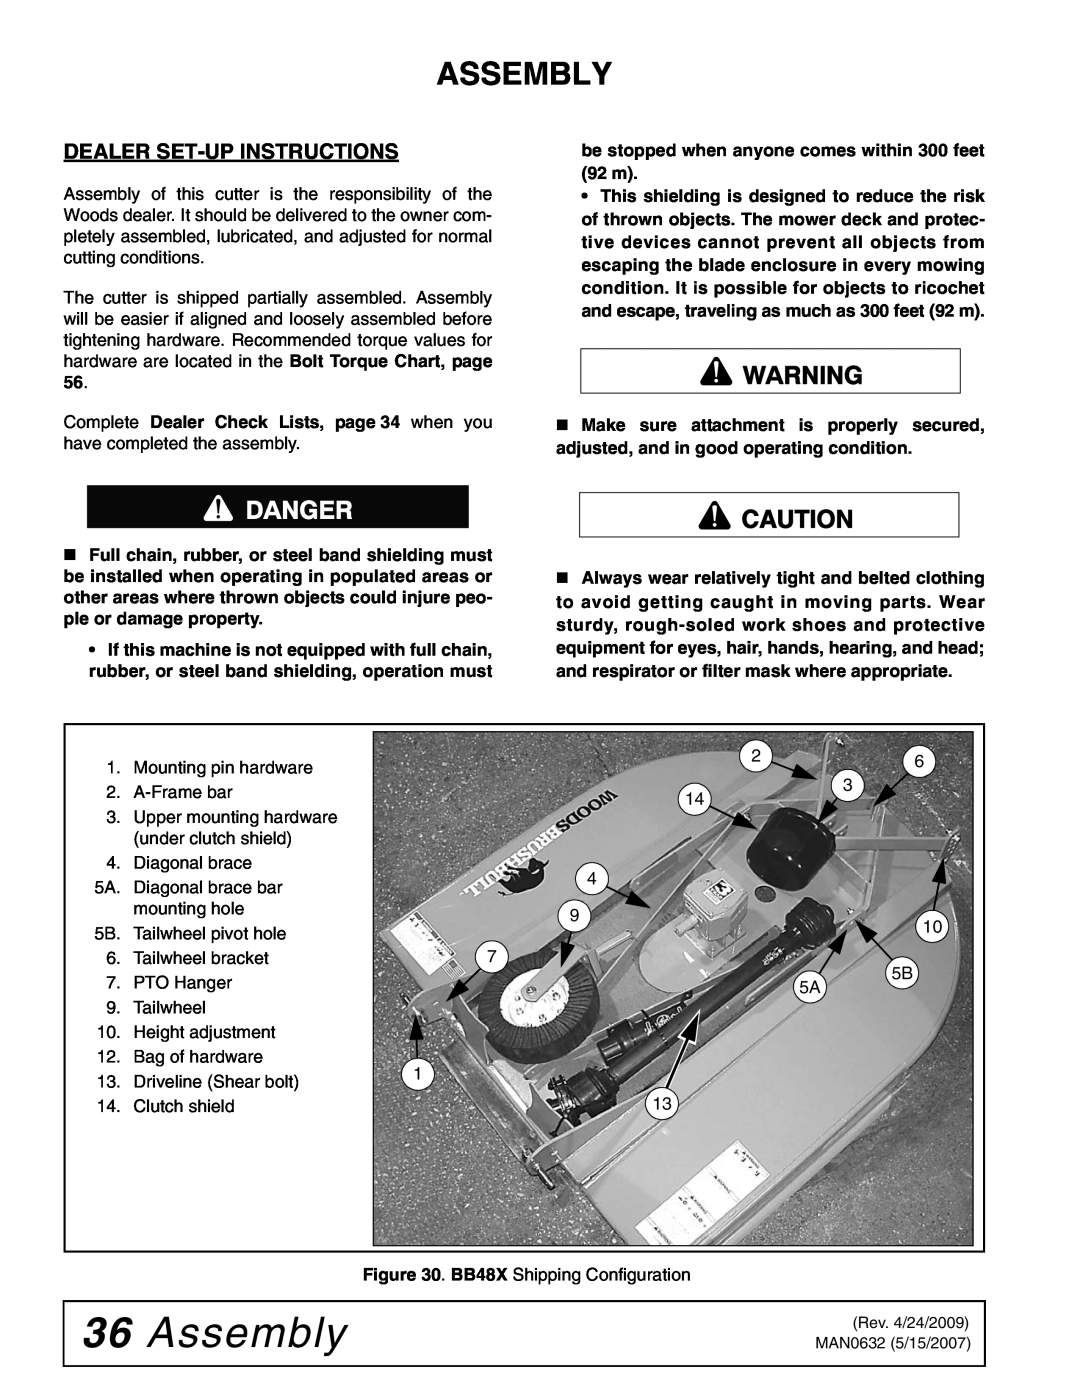 Woods Equipment BB48X, BB84X, BB60X, BB72X manual 36Assembly, Dealer Set-Upinstructions 